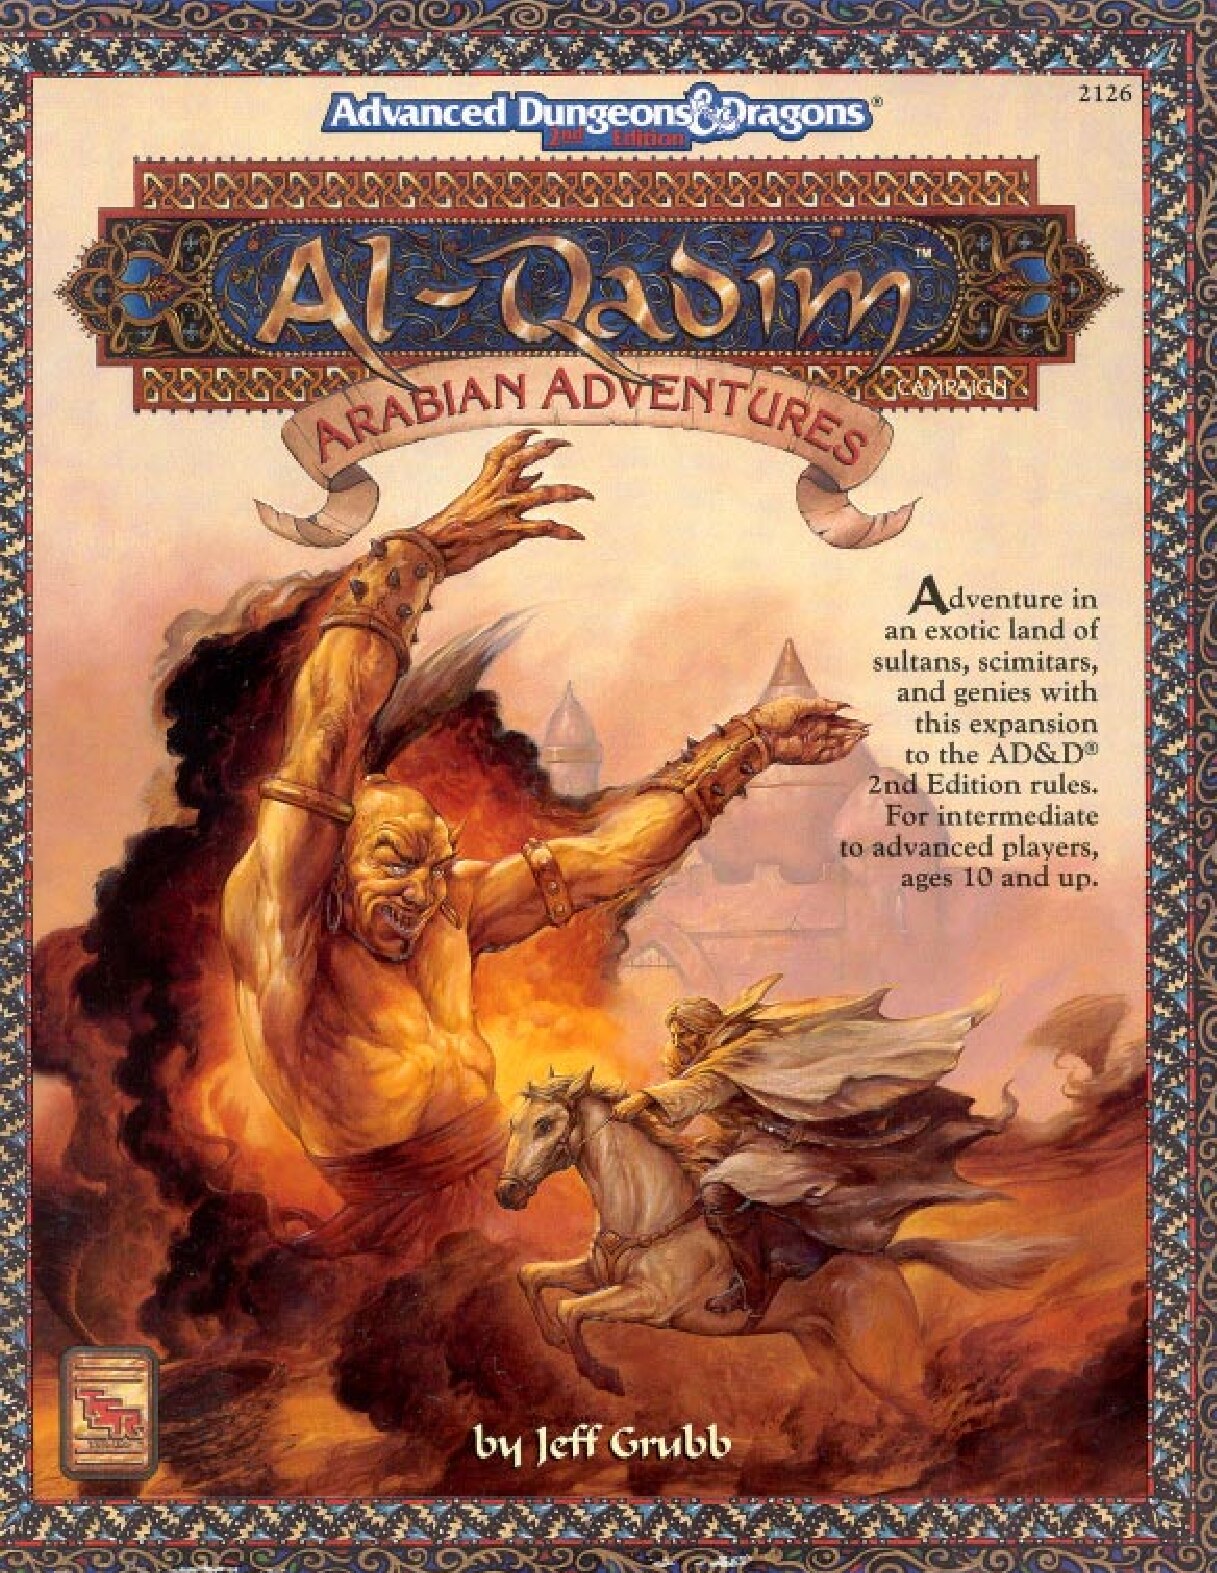 Al-Qadim: Arabian Adventures